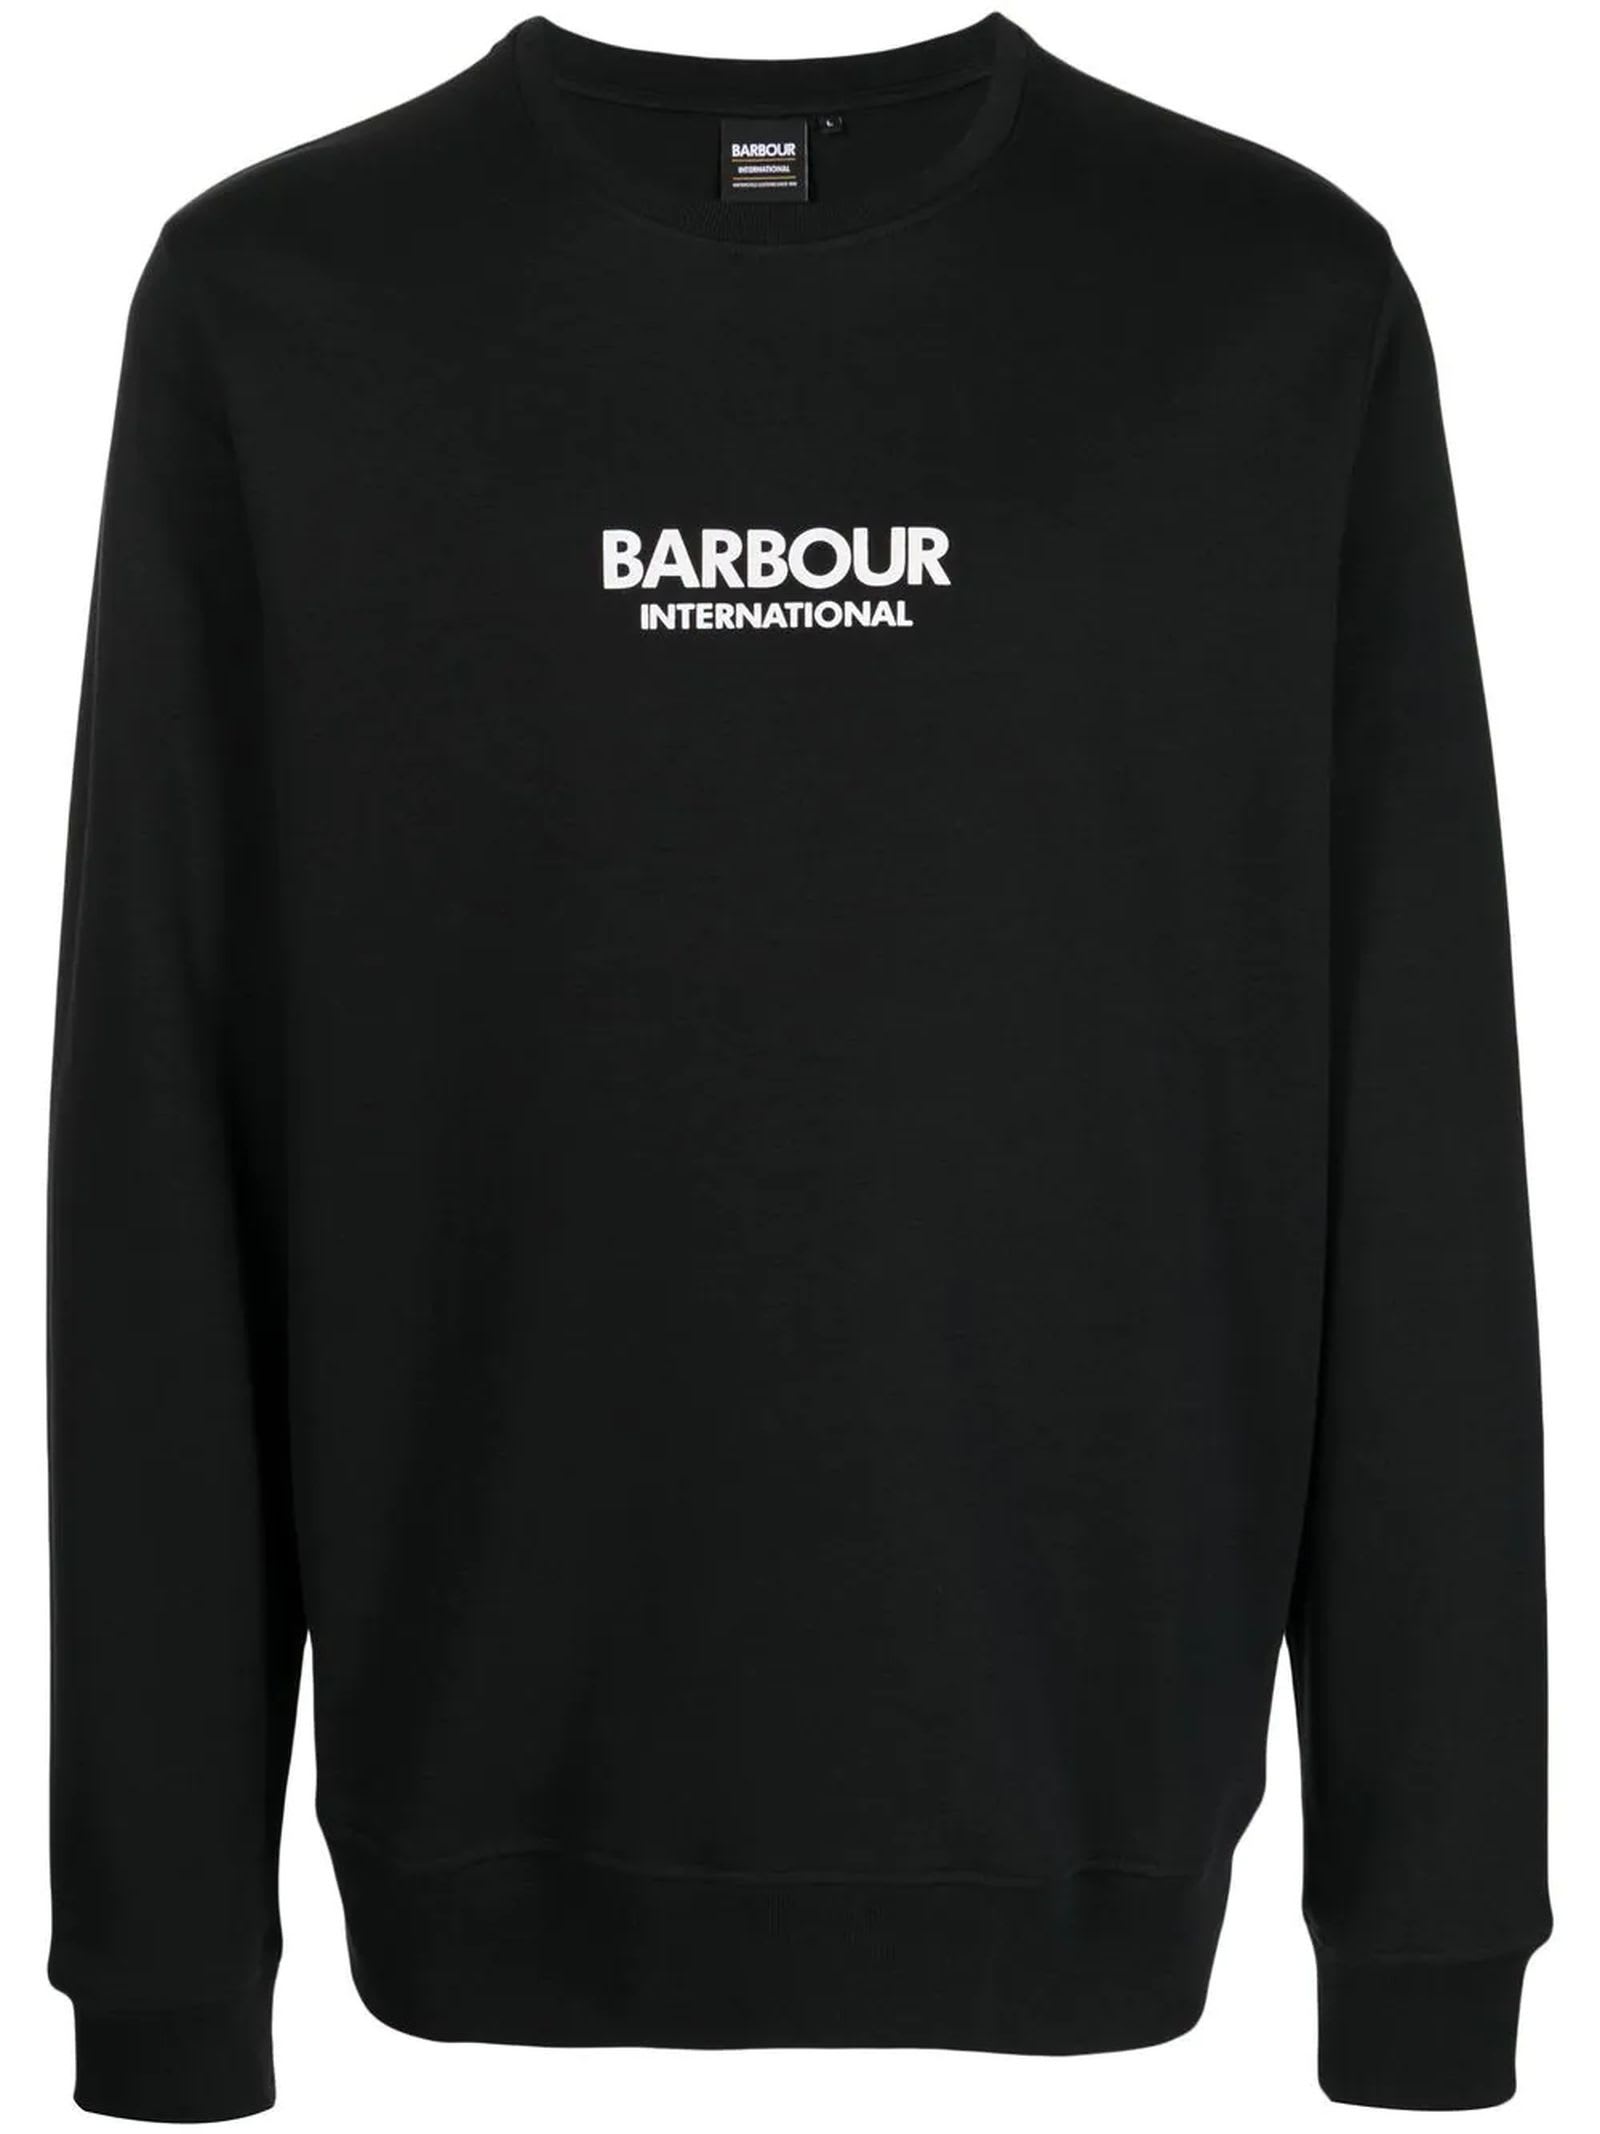 Barbour Black Cotton Sweatshirt